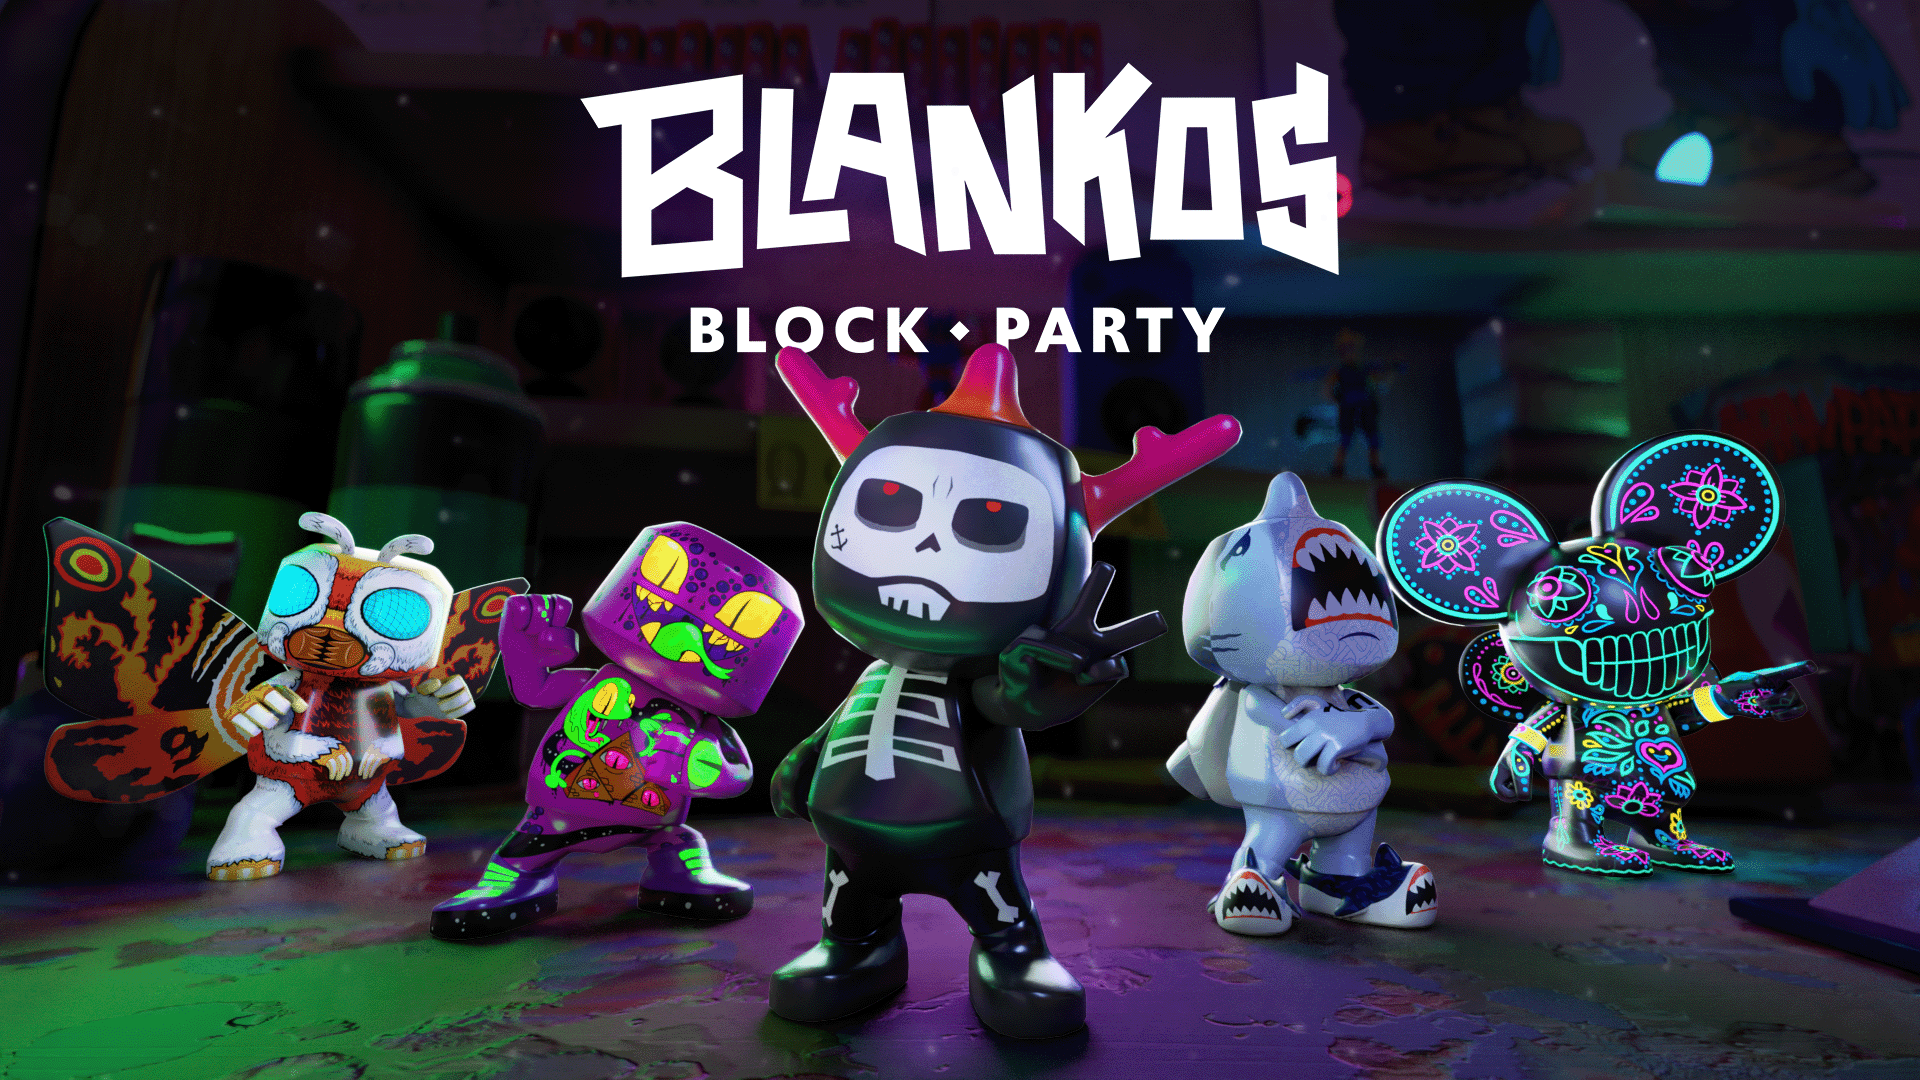 Blankos Block Party PC Version Game Free Download